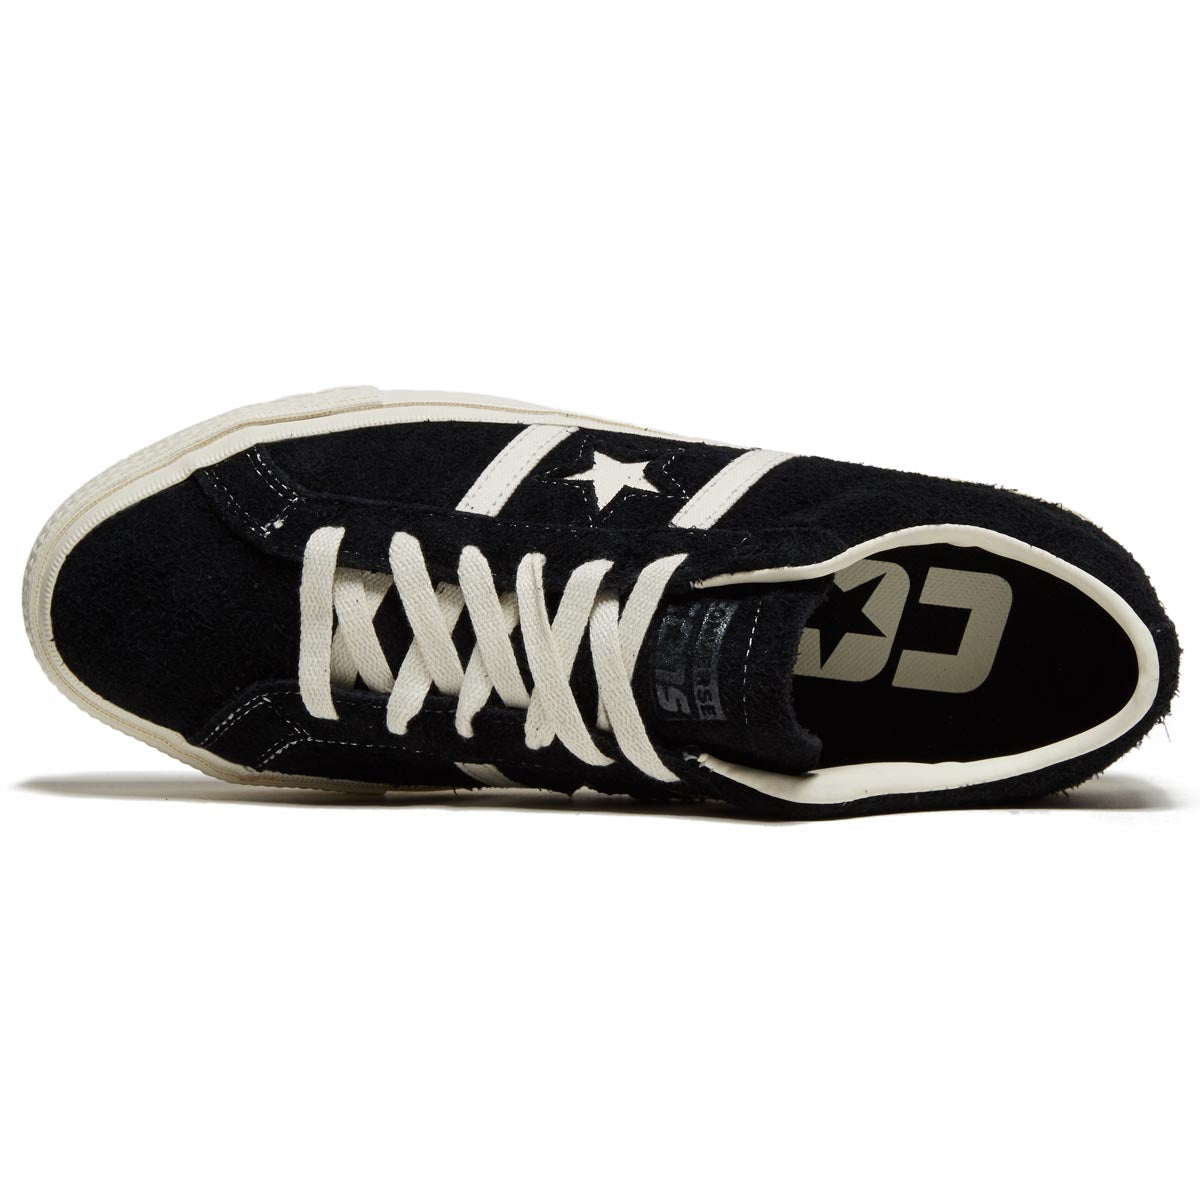 Converse One Star Academy Pro Suede Ox Shoes - Black/Egret/Egret image 3